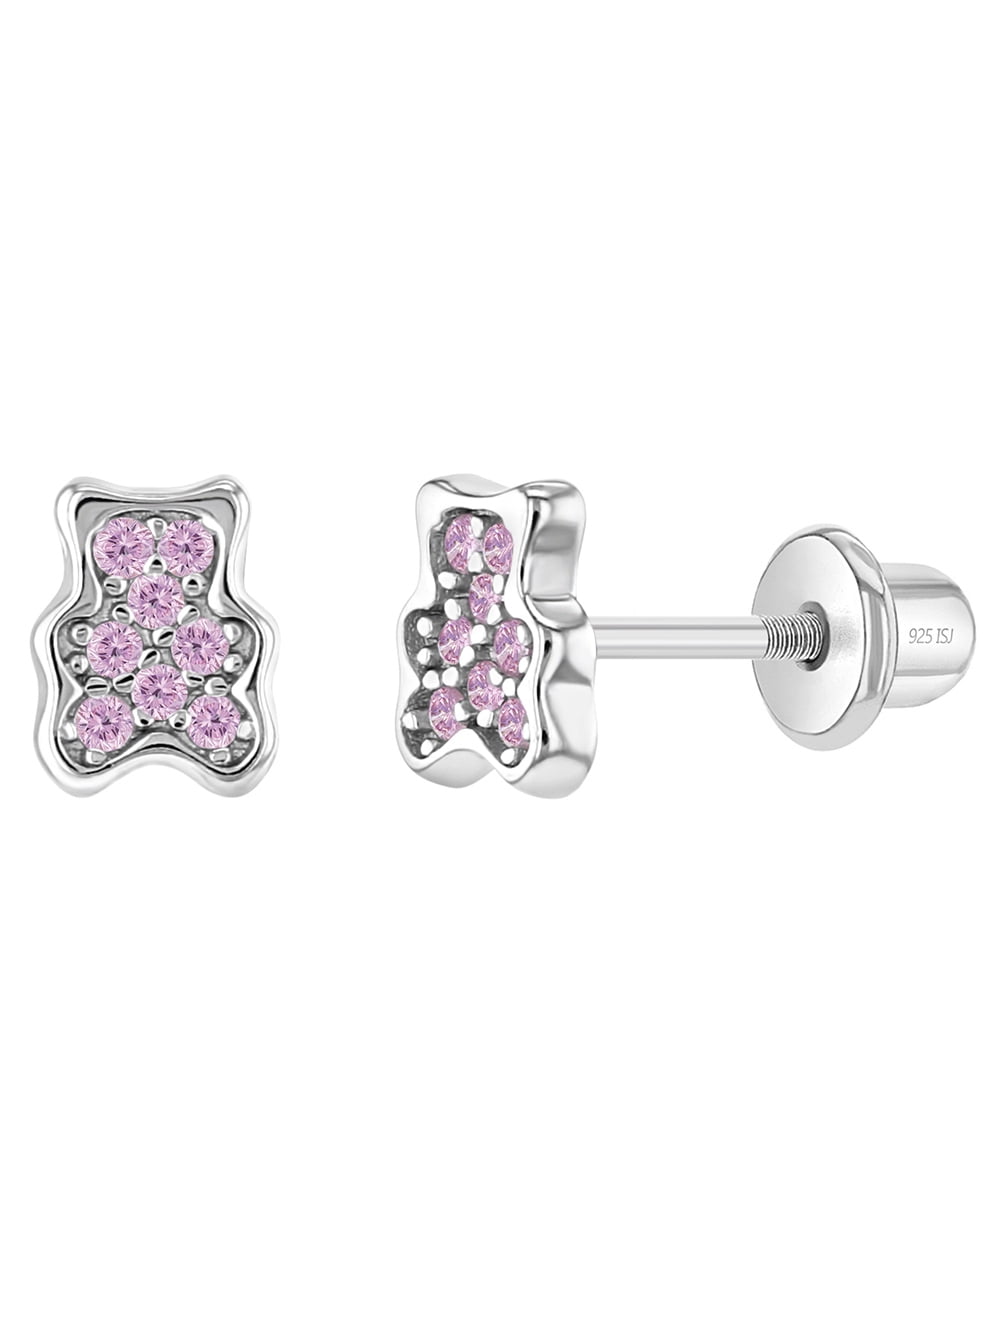 Birthday Gift for Her Gemstone Jewelry Boucles d'Oreilles Modern Dangle Earrings Pink Earrings 925 Sterling Silver Earrings